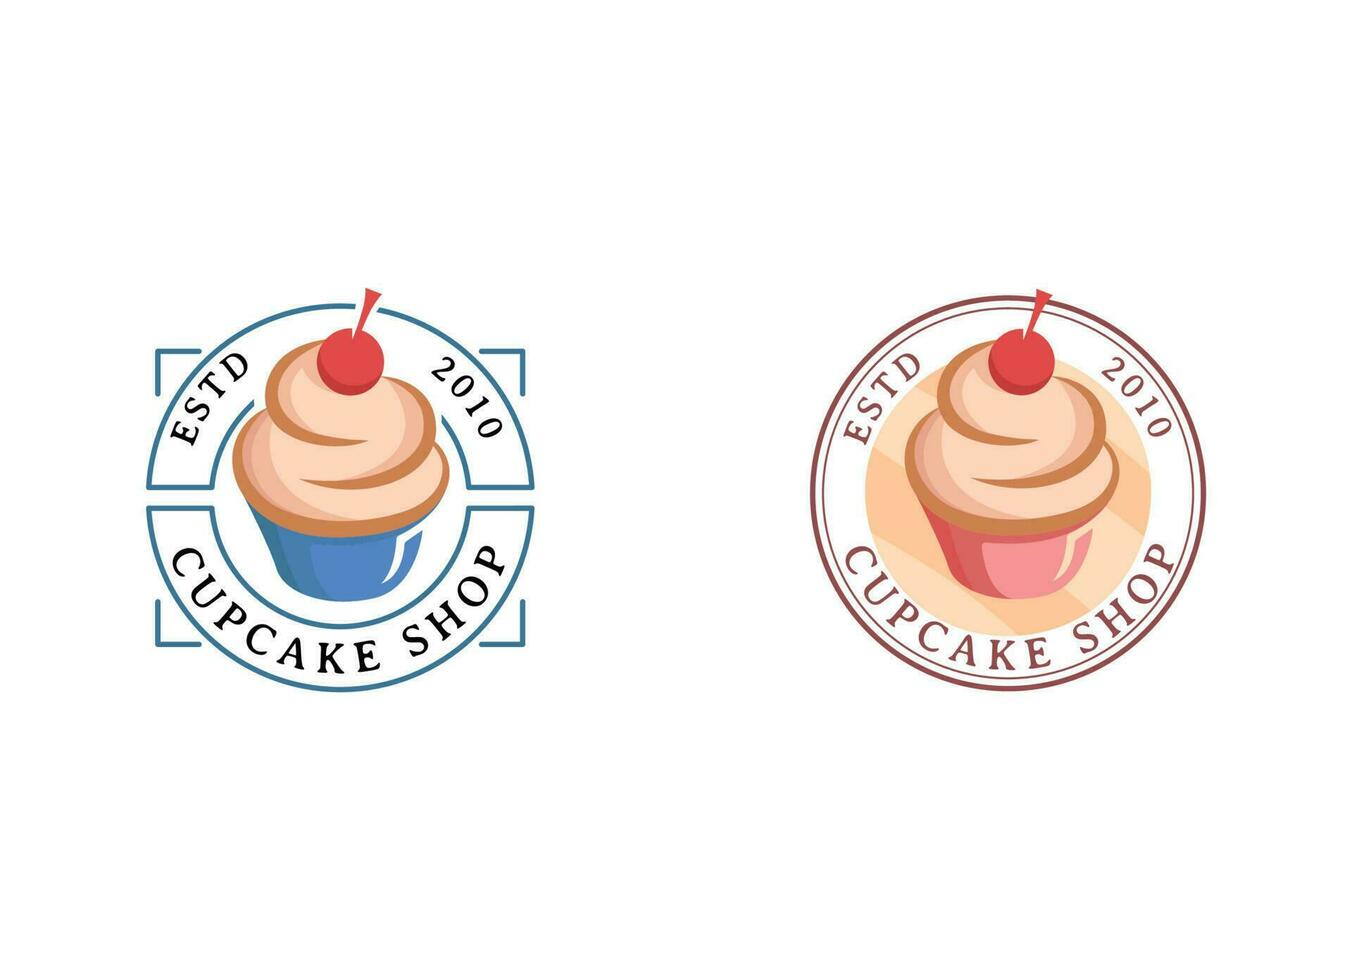 Sweet Cake Logo Cupcake Logo Icon vector